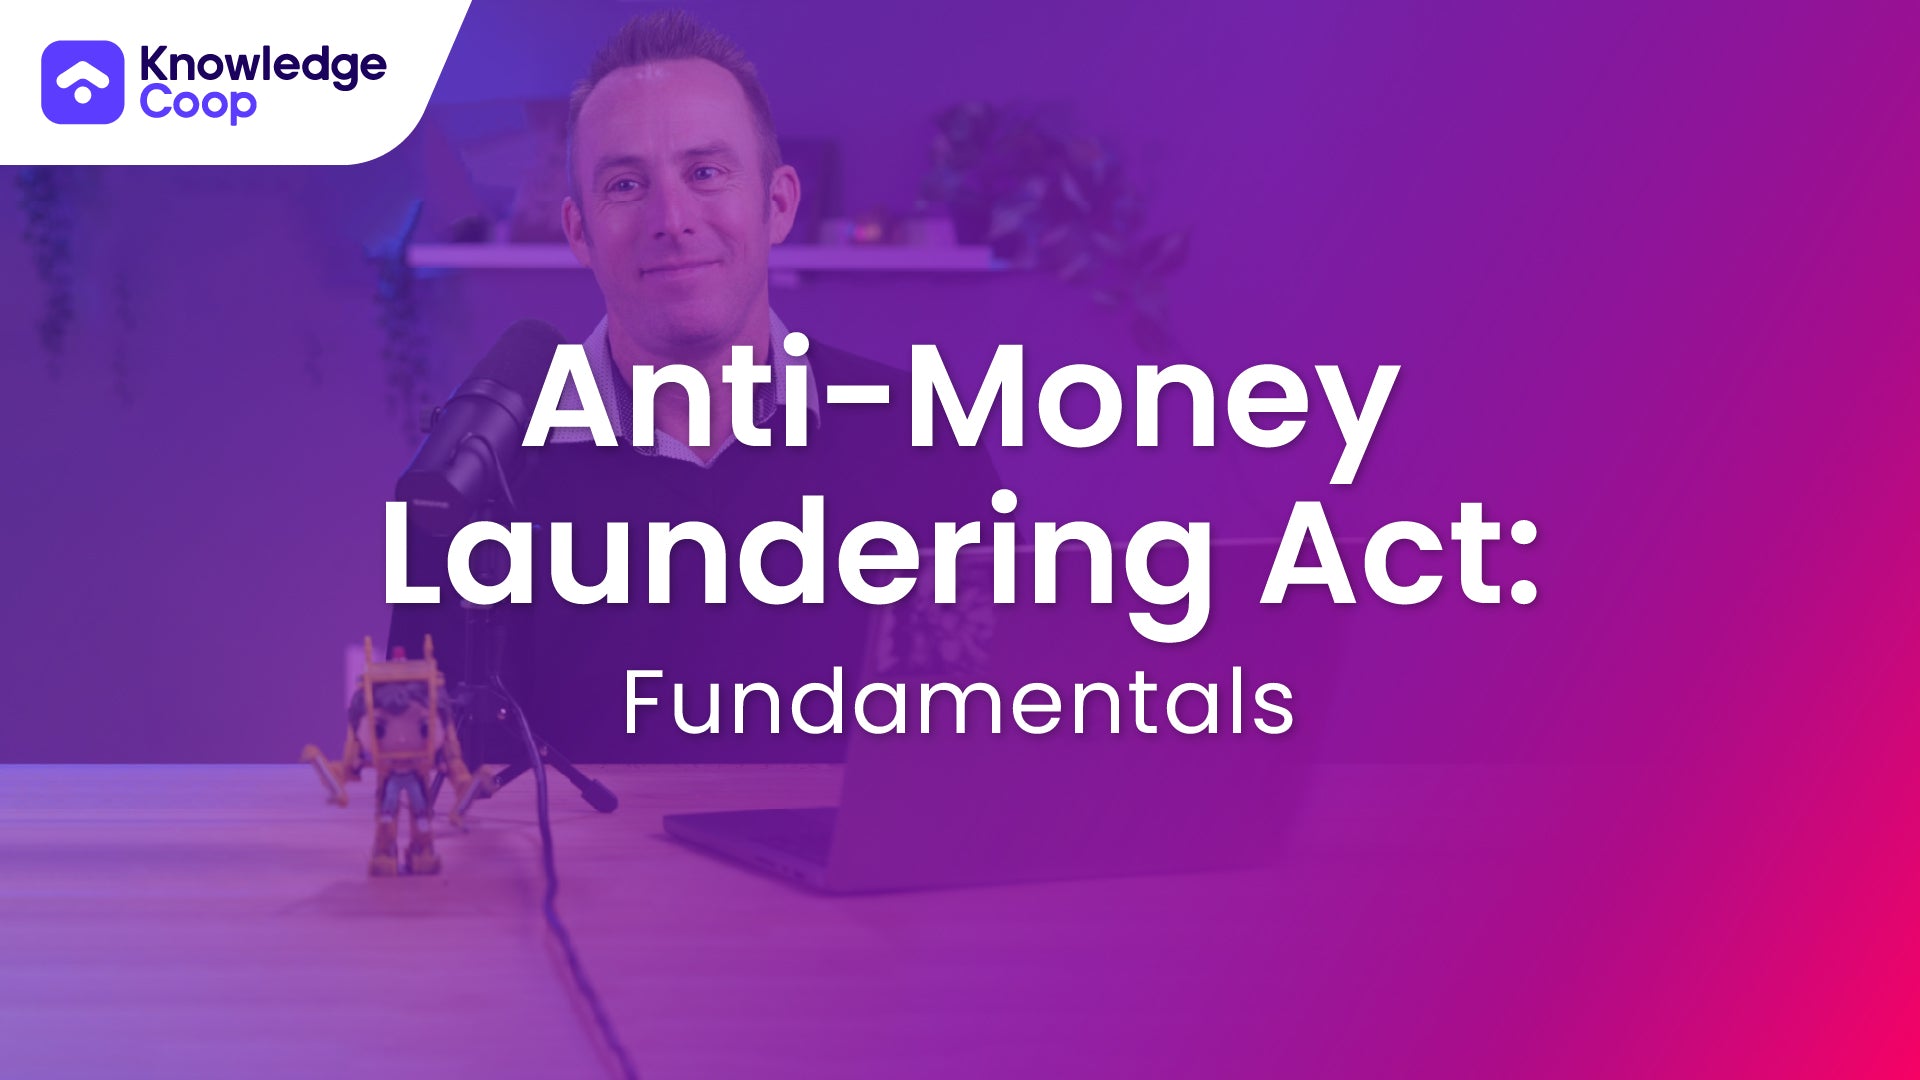 Anti-Money Laundering Act: Fundamentals